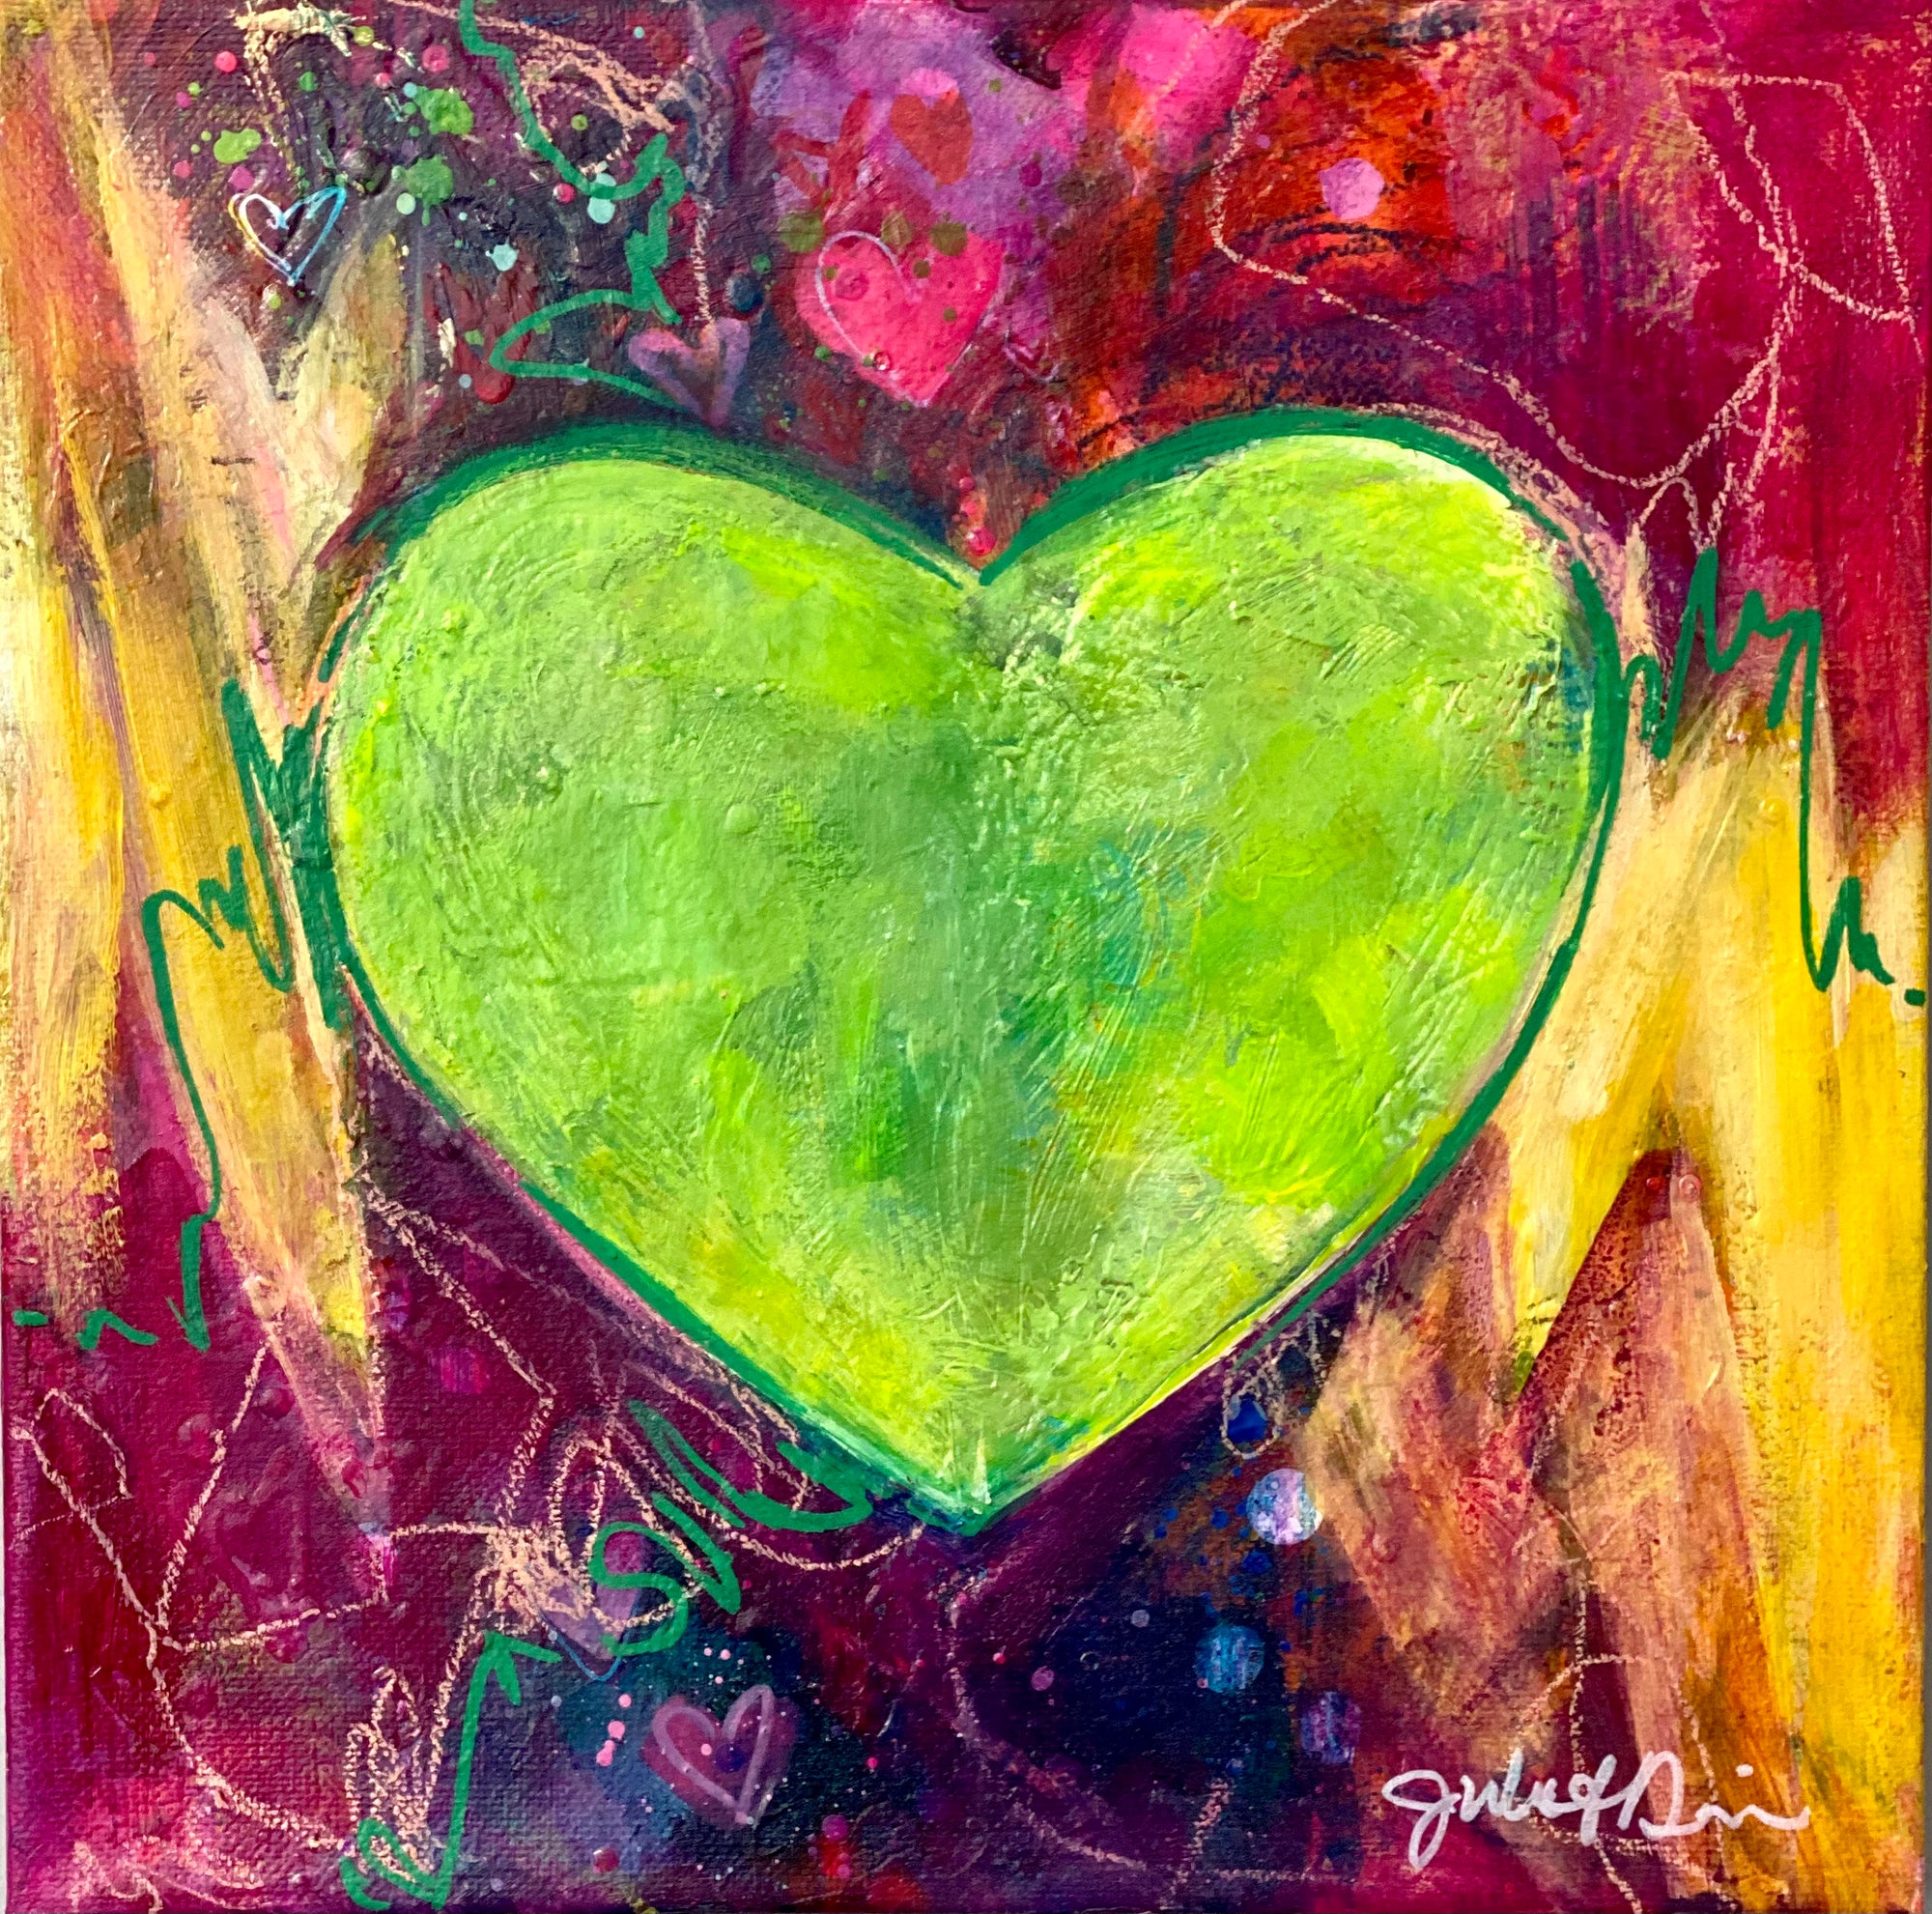 Follow Your Heart No. 6 10x10" Original on Canvas